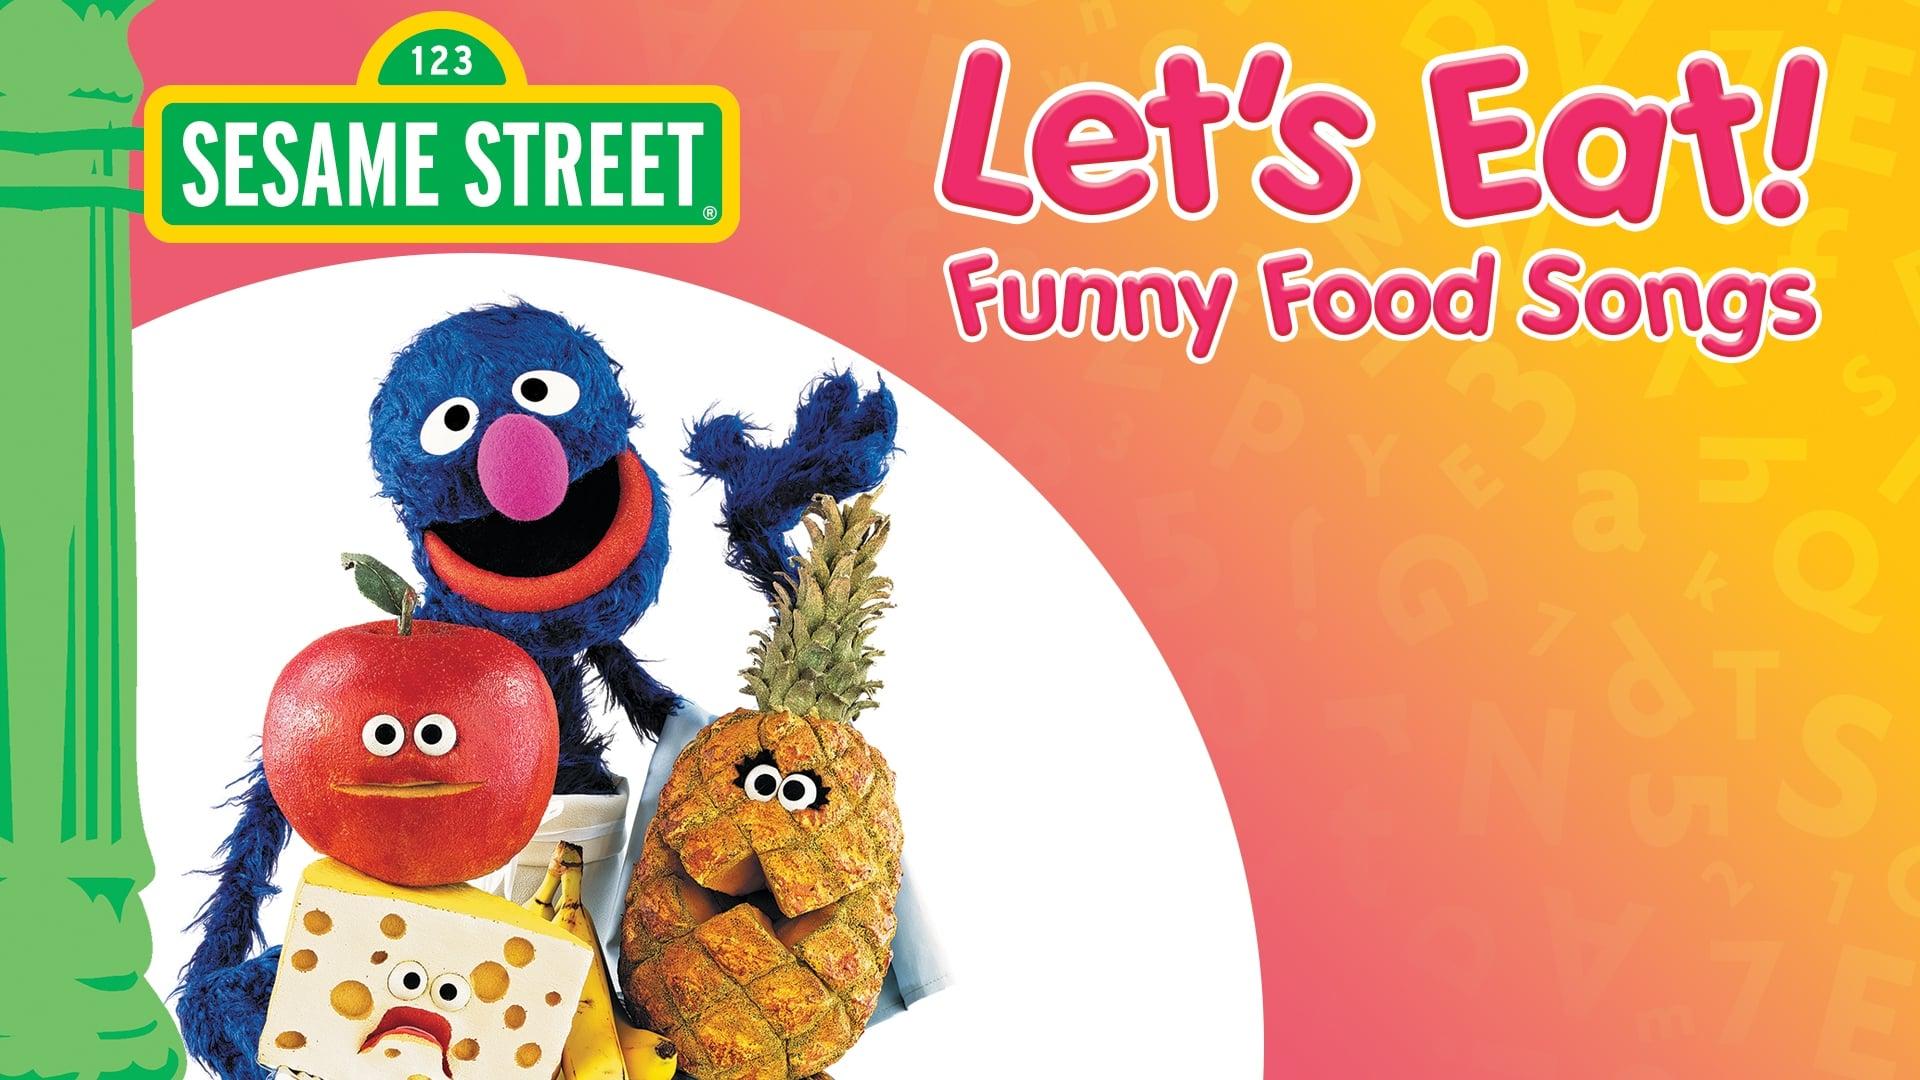 Sesame Street: Let's Eat! Funny Food Songs backdrop